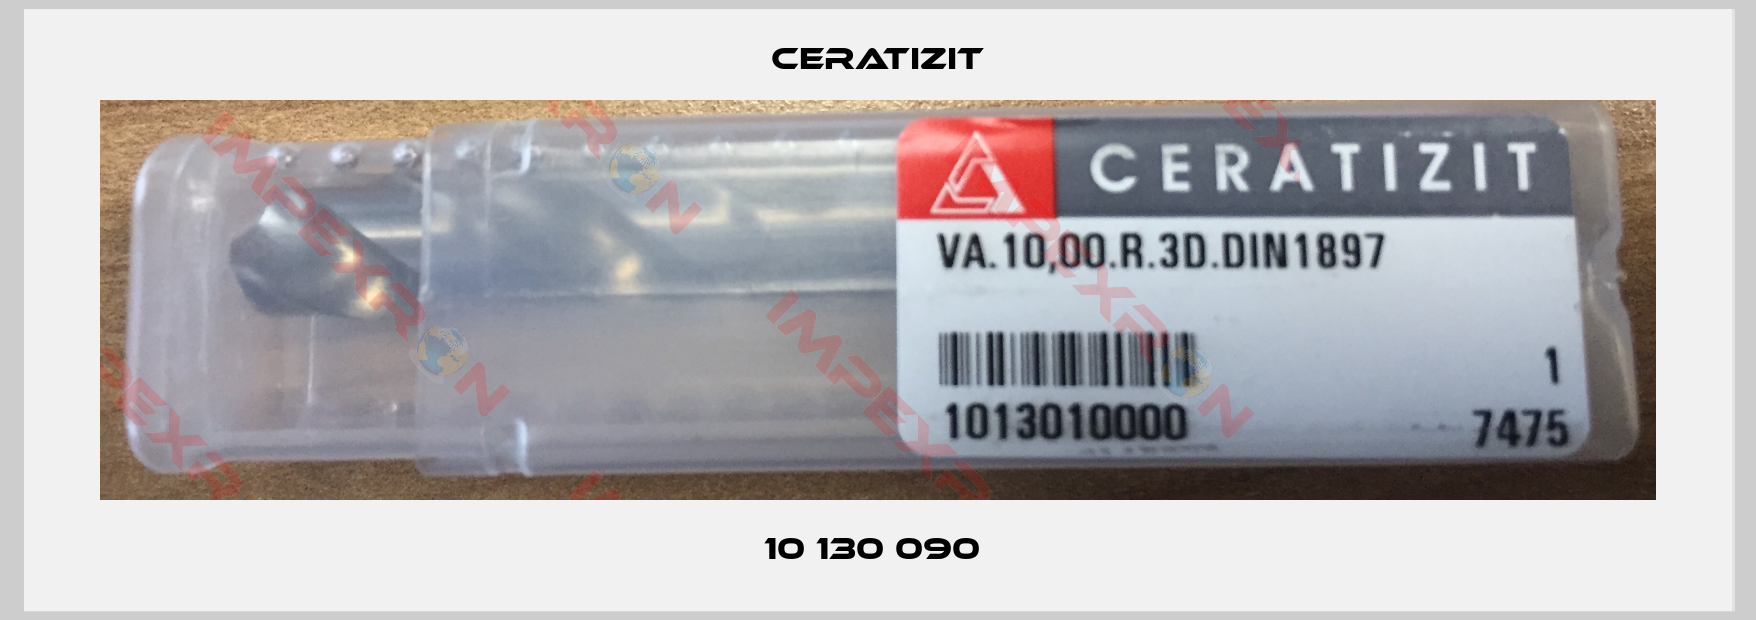 Ceratizit-10 130 090 